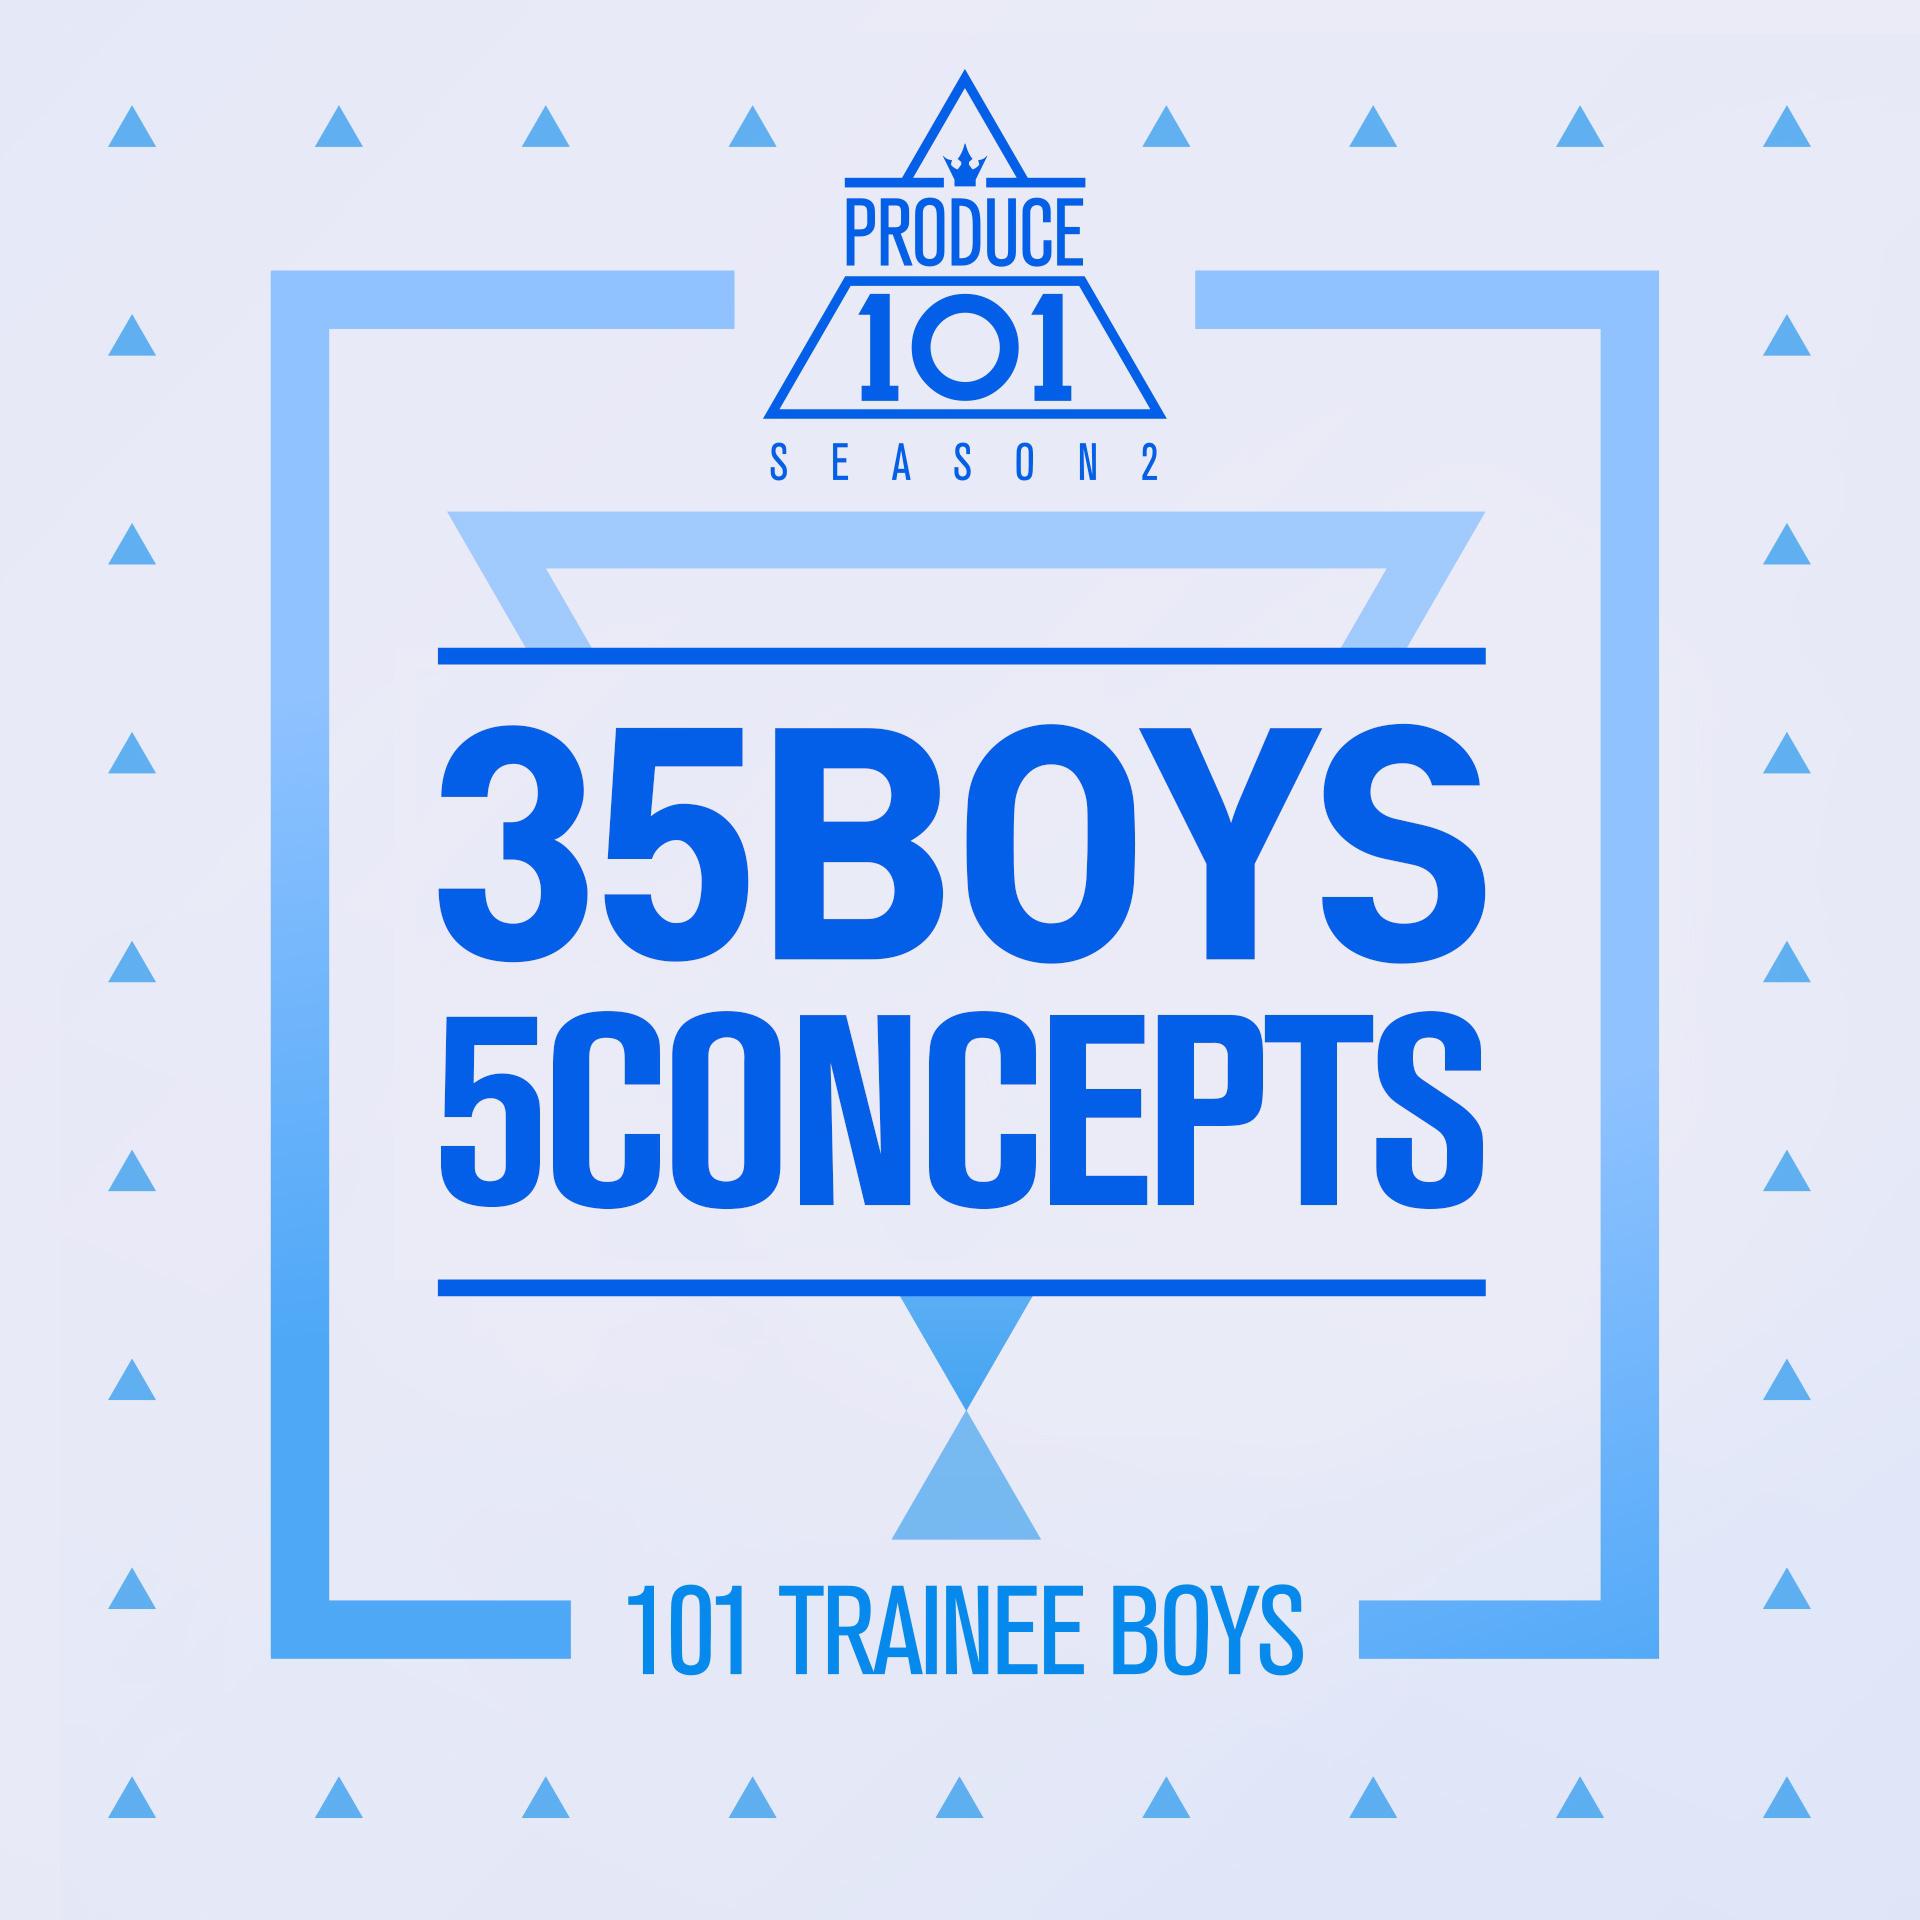 NEVER歌词 歌手国民之子-专辑PRODUCE 101 - 35 Boys 5 Concepts-单曲《NEVER》LRC歌词下载